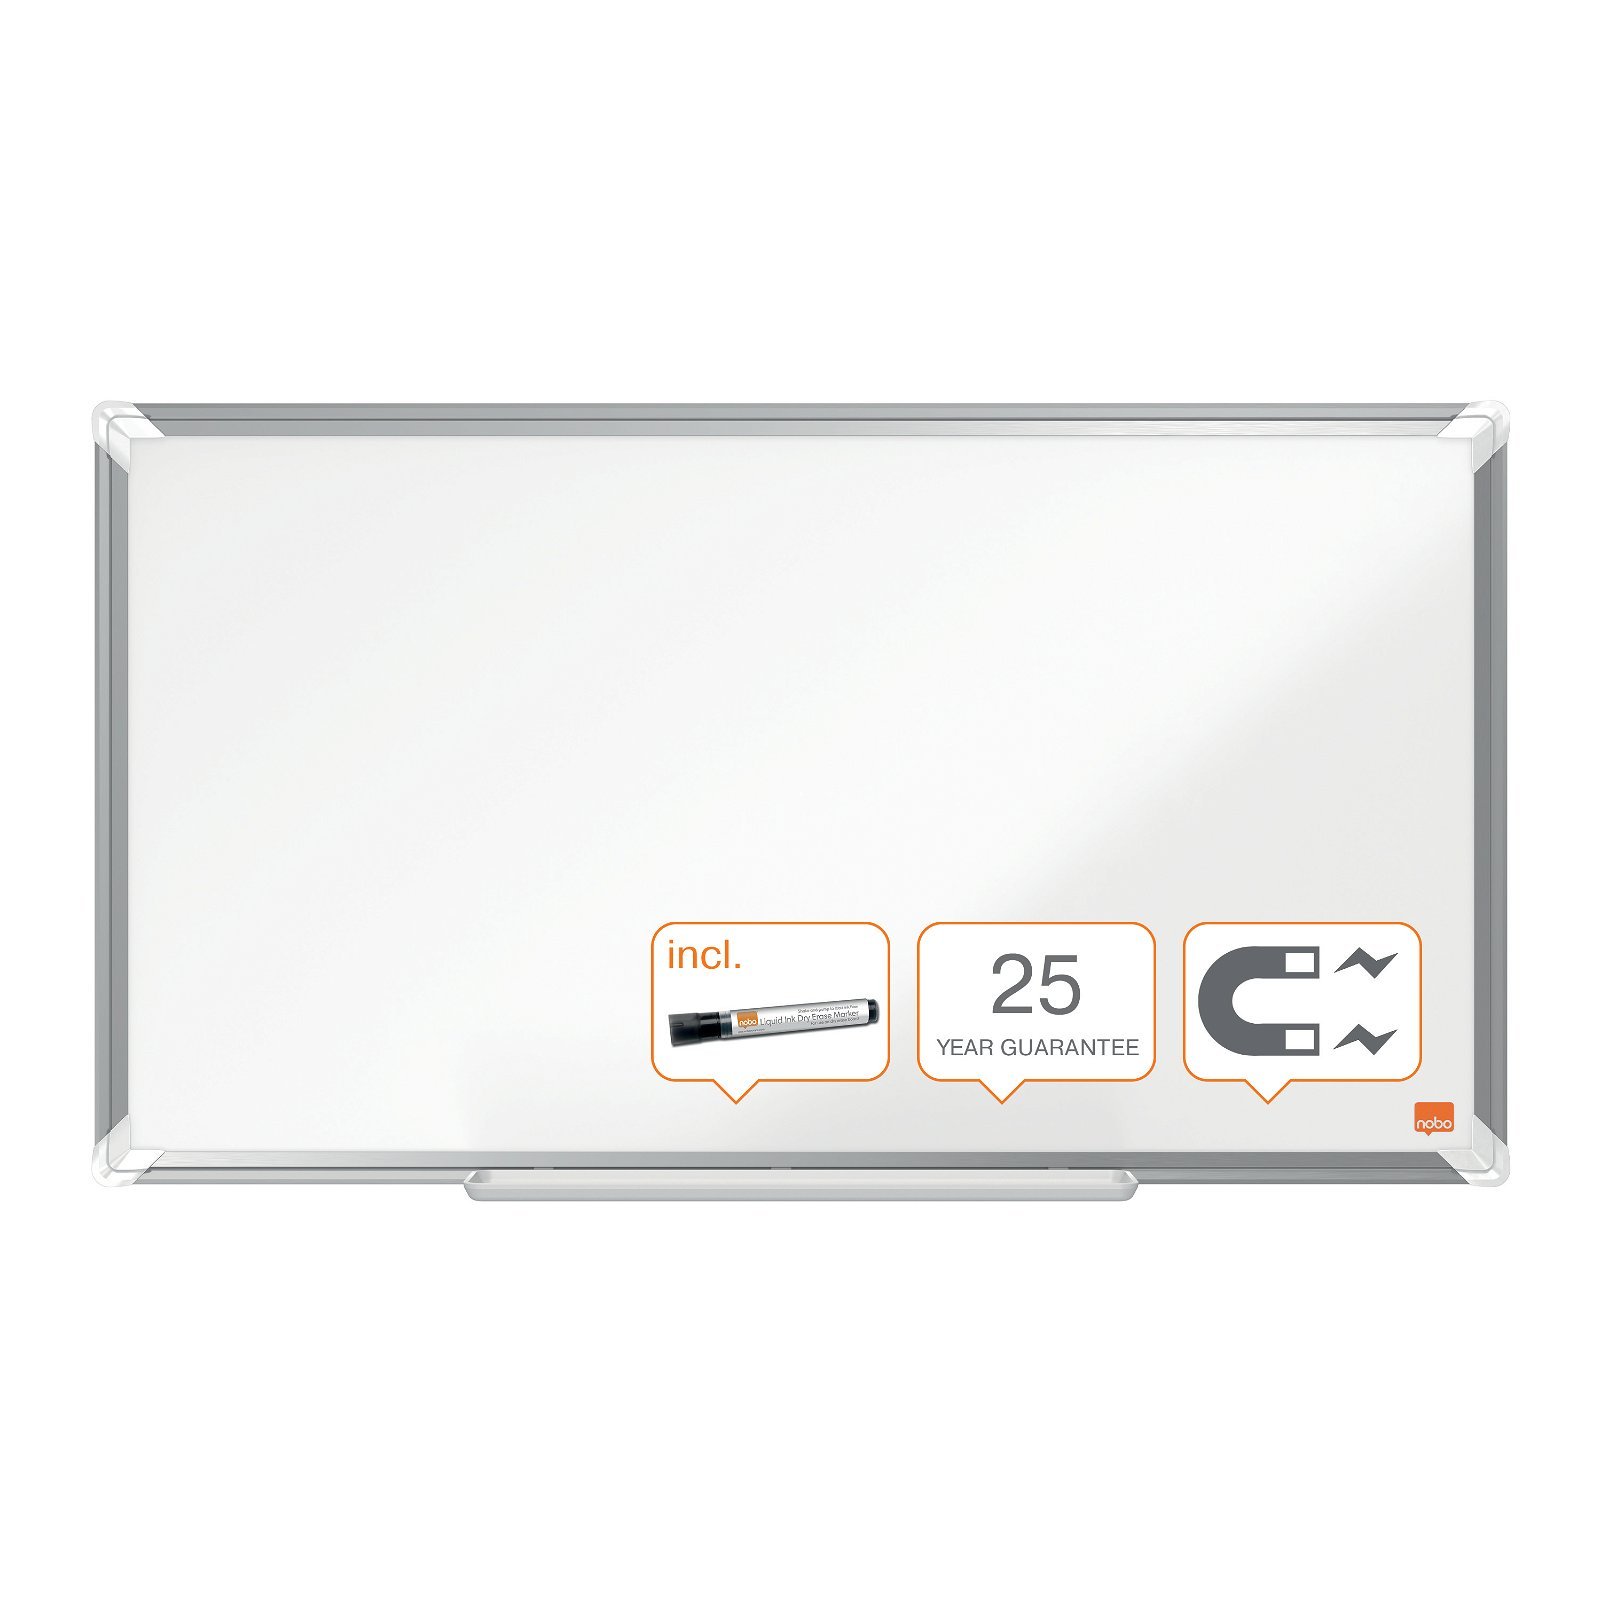 Nobo Premium Plus widescreen whiteboardtavle 40 cm x 71 cm,